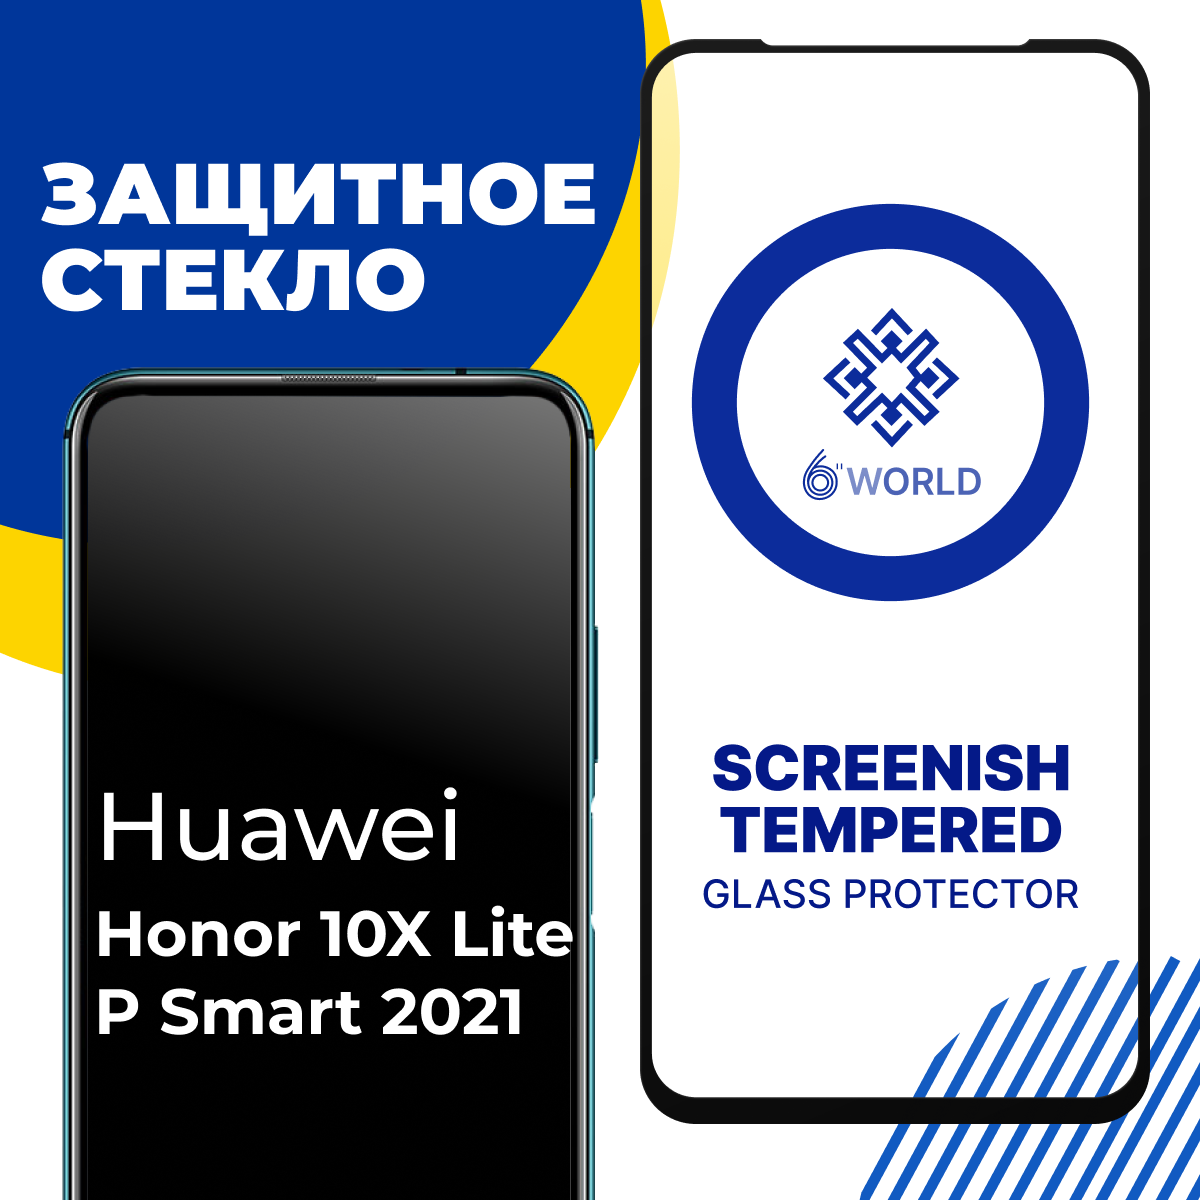 Глянцевое защитное стекло для Huawei Honor 10X Lite и P Smart 2021 / Закаленное стекло на Хуавей Хонор 10Х Лайт и П Смарт 2021 / SCREENISH GLASS